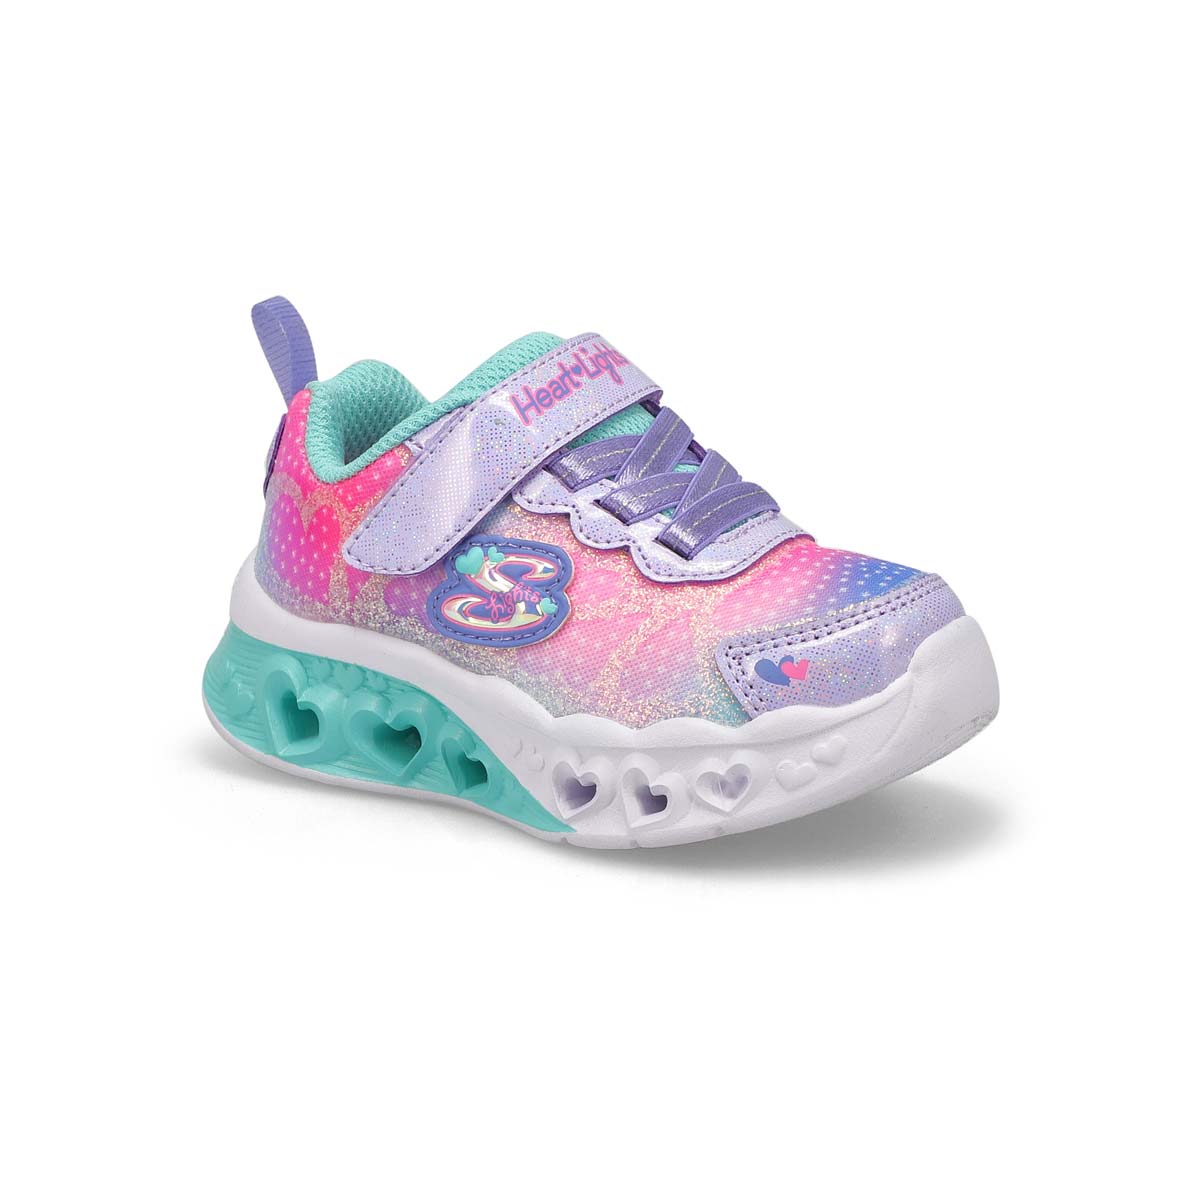 Infants' G Flutter Heart Lights Sneaker- Lavender